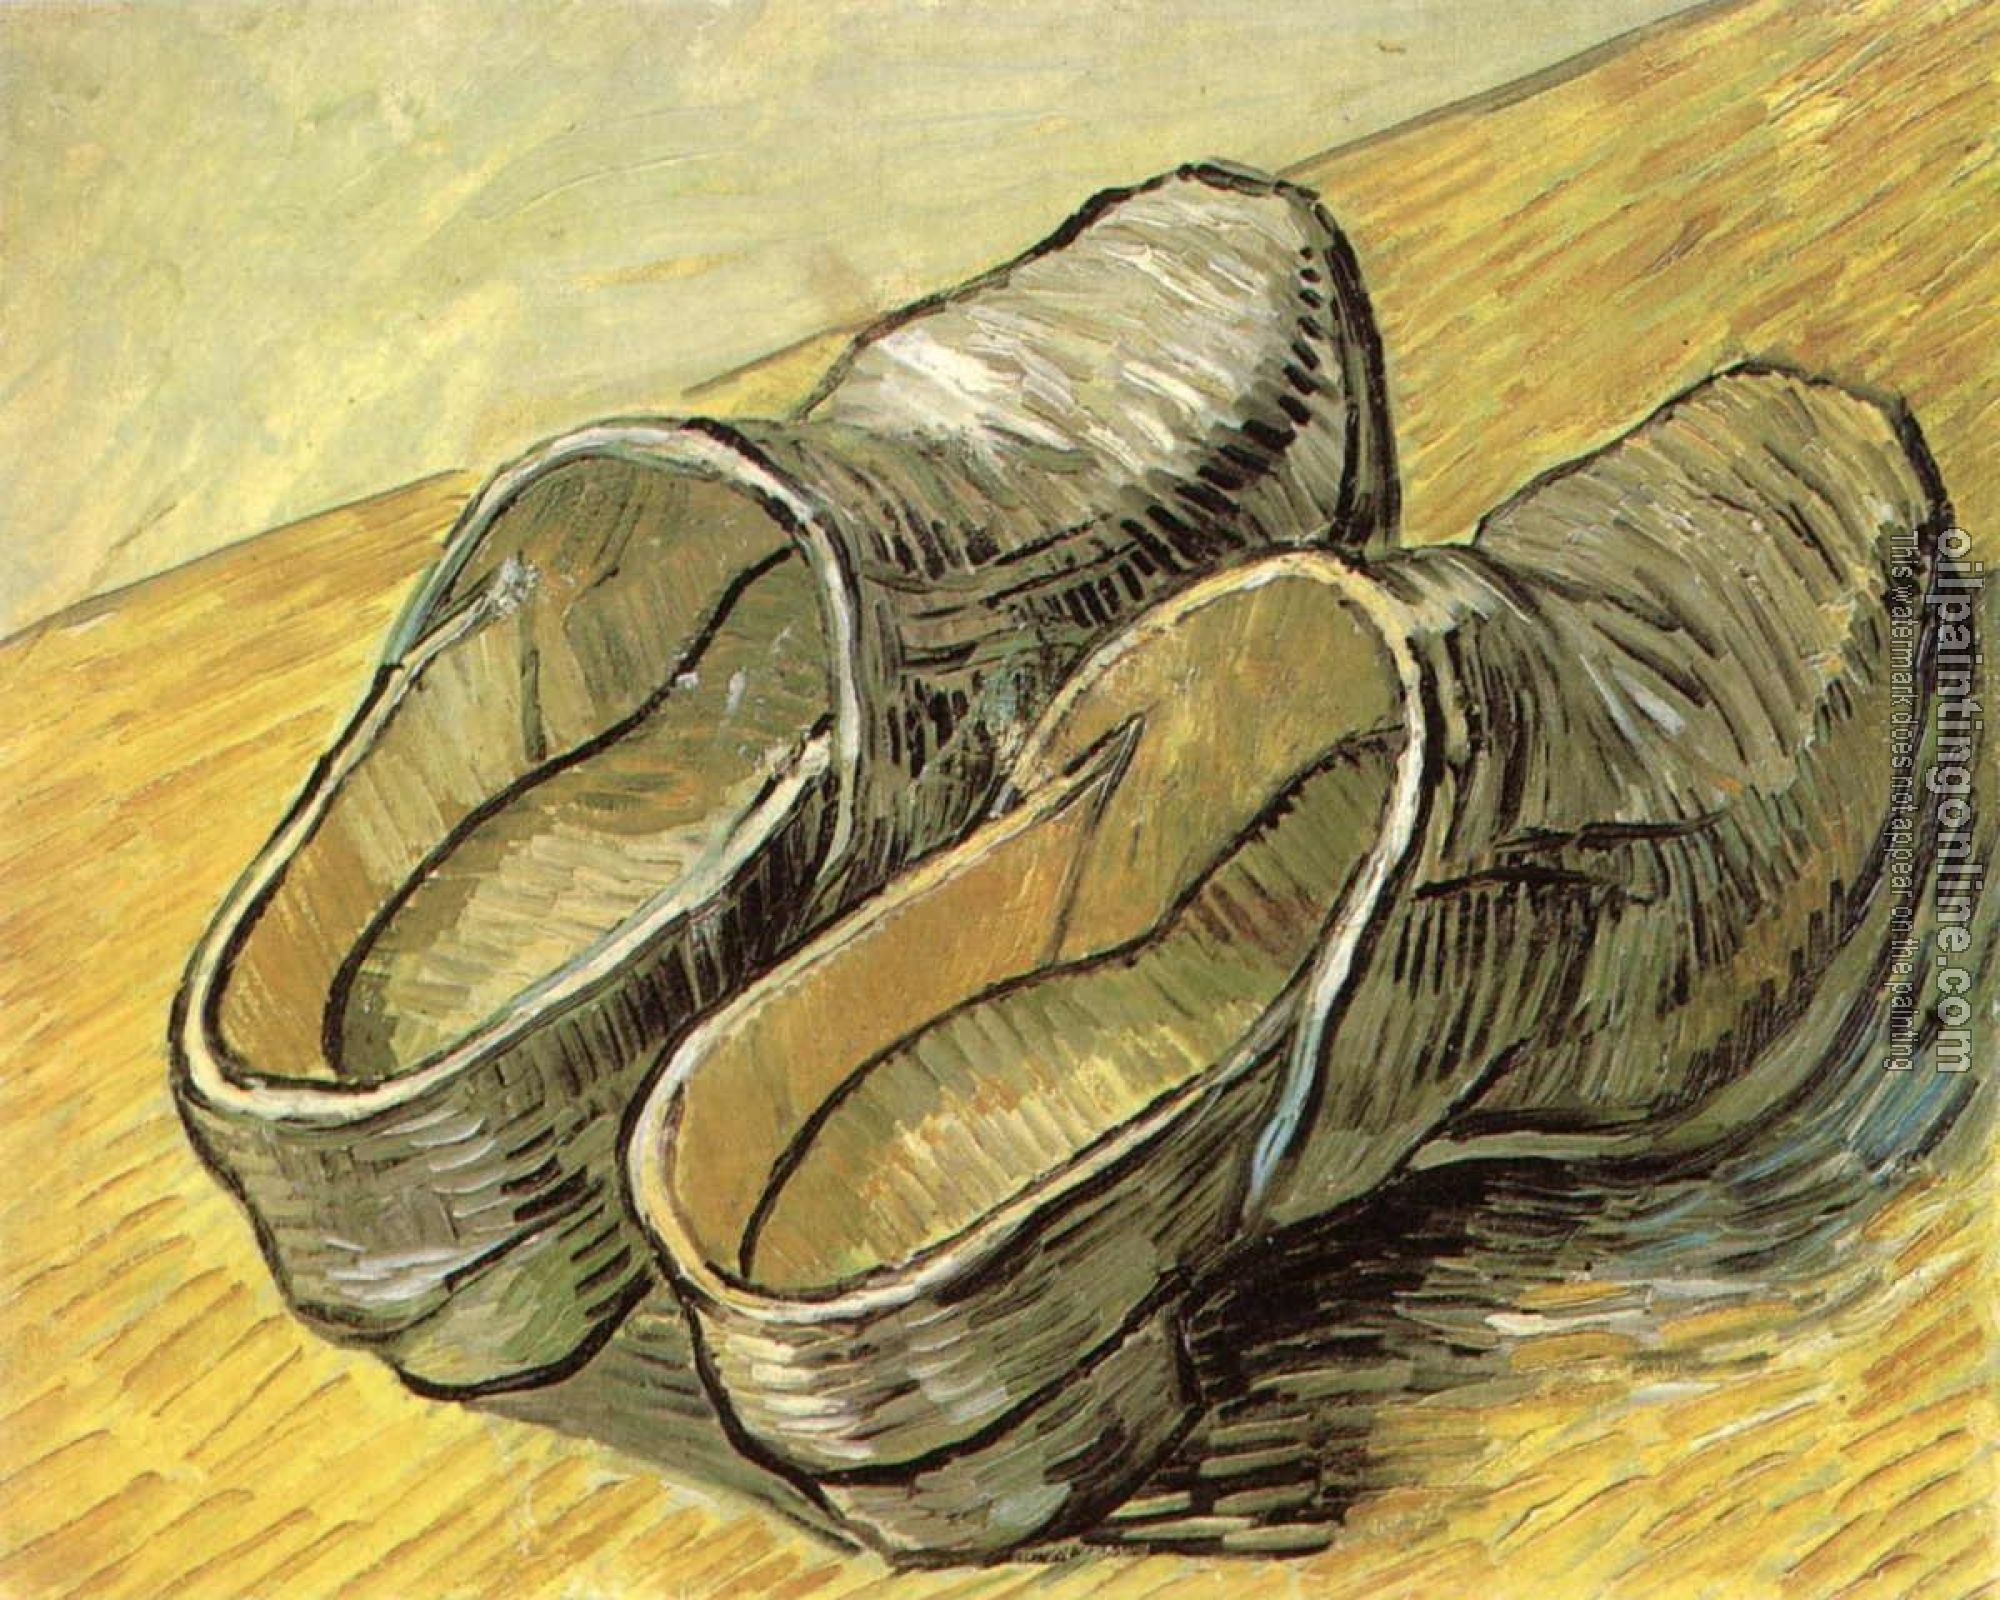 Gogh, Vincent van - A Pair of Leather Clogs